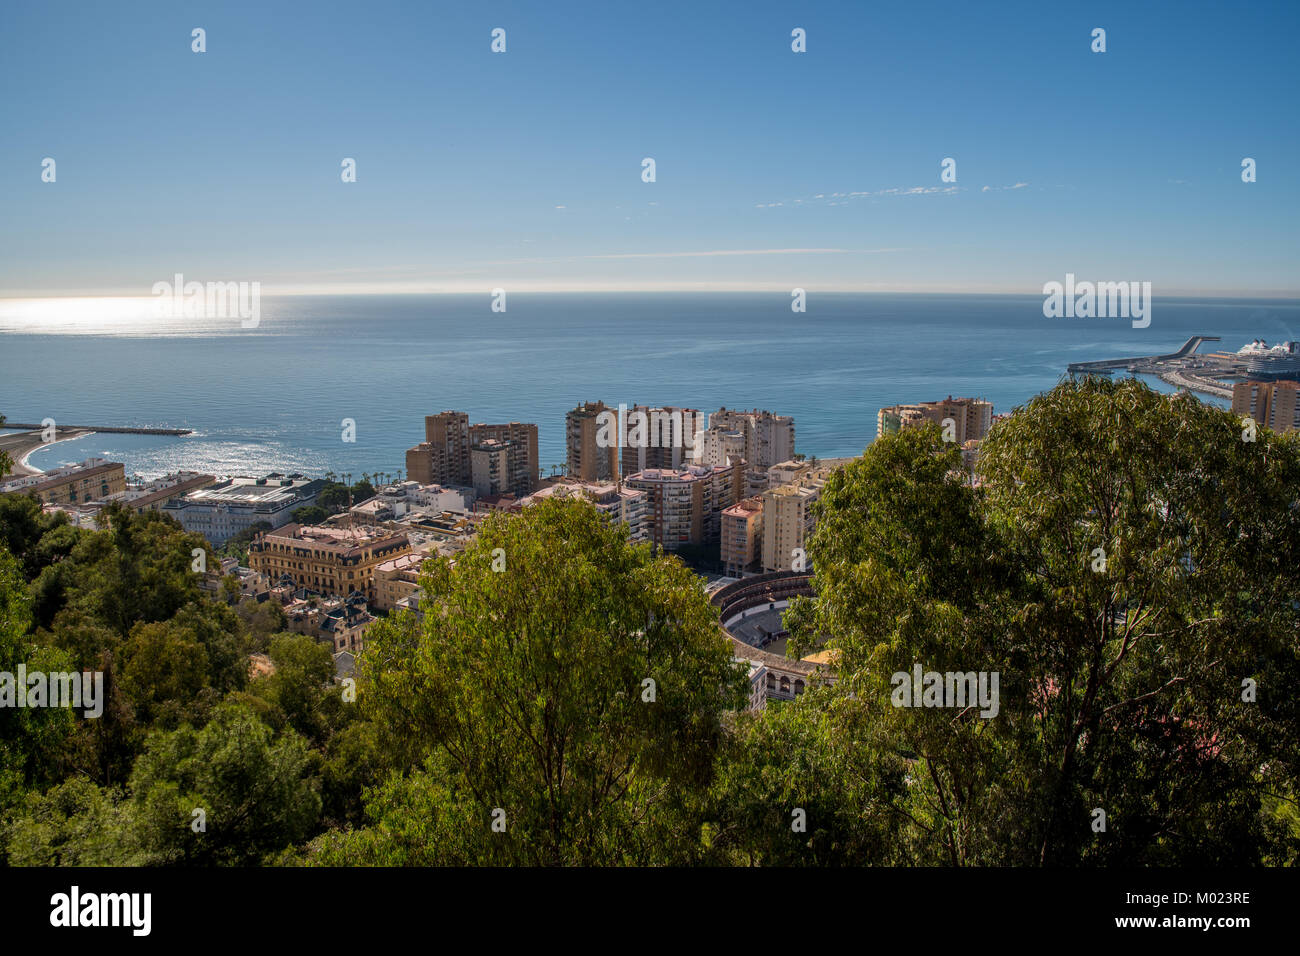 MALAGA, Andalusien/Spanien - Oktober 05, 2017: Blick auf die Stadt Malaga Stockfoto